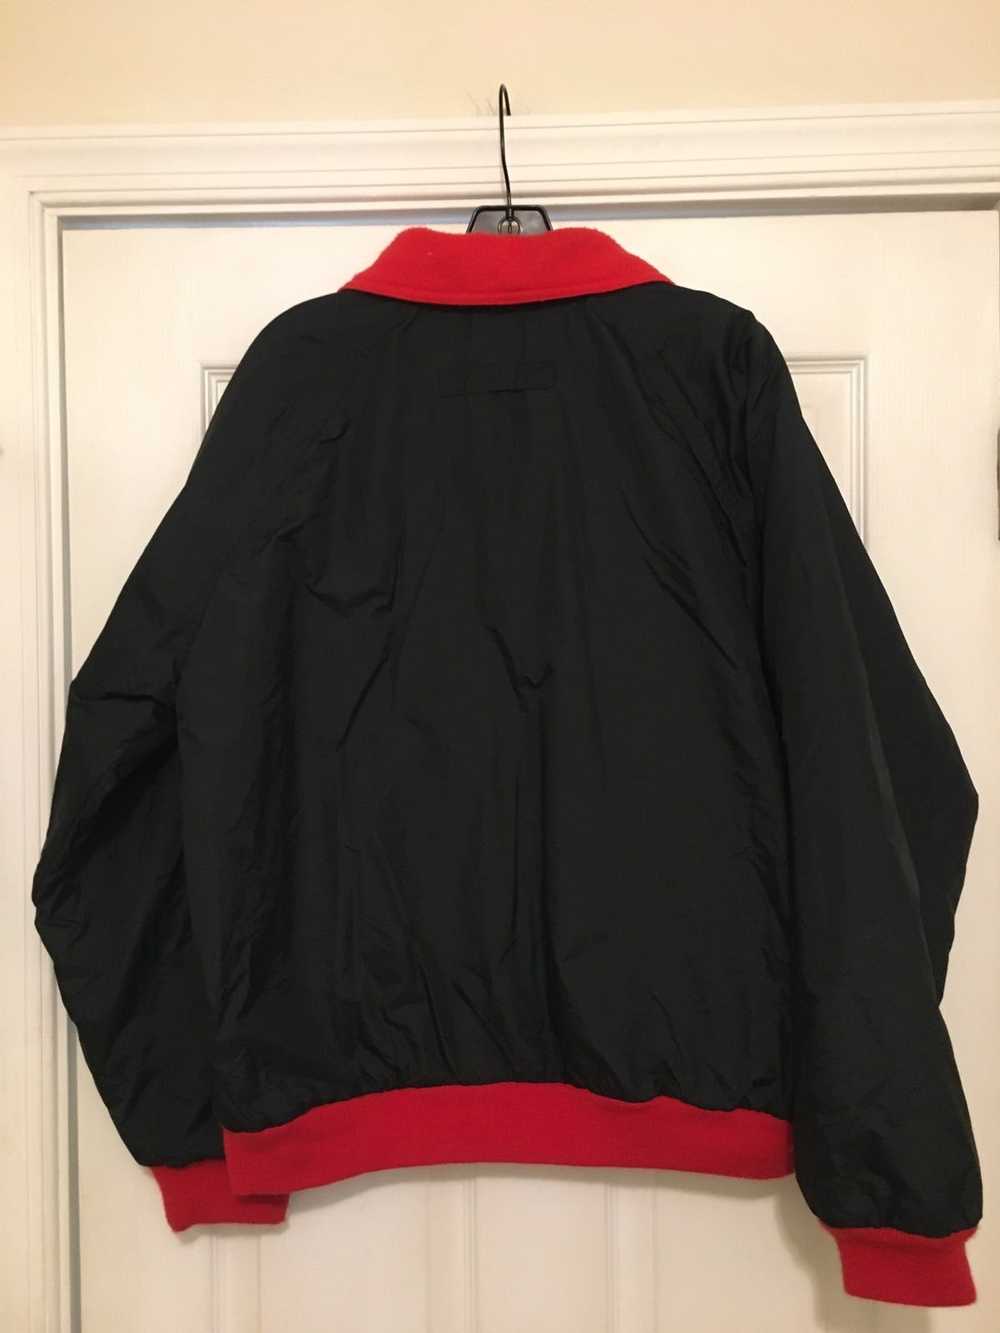 Vintage 1980s Sasson red black jacket - image 4